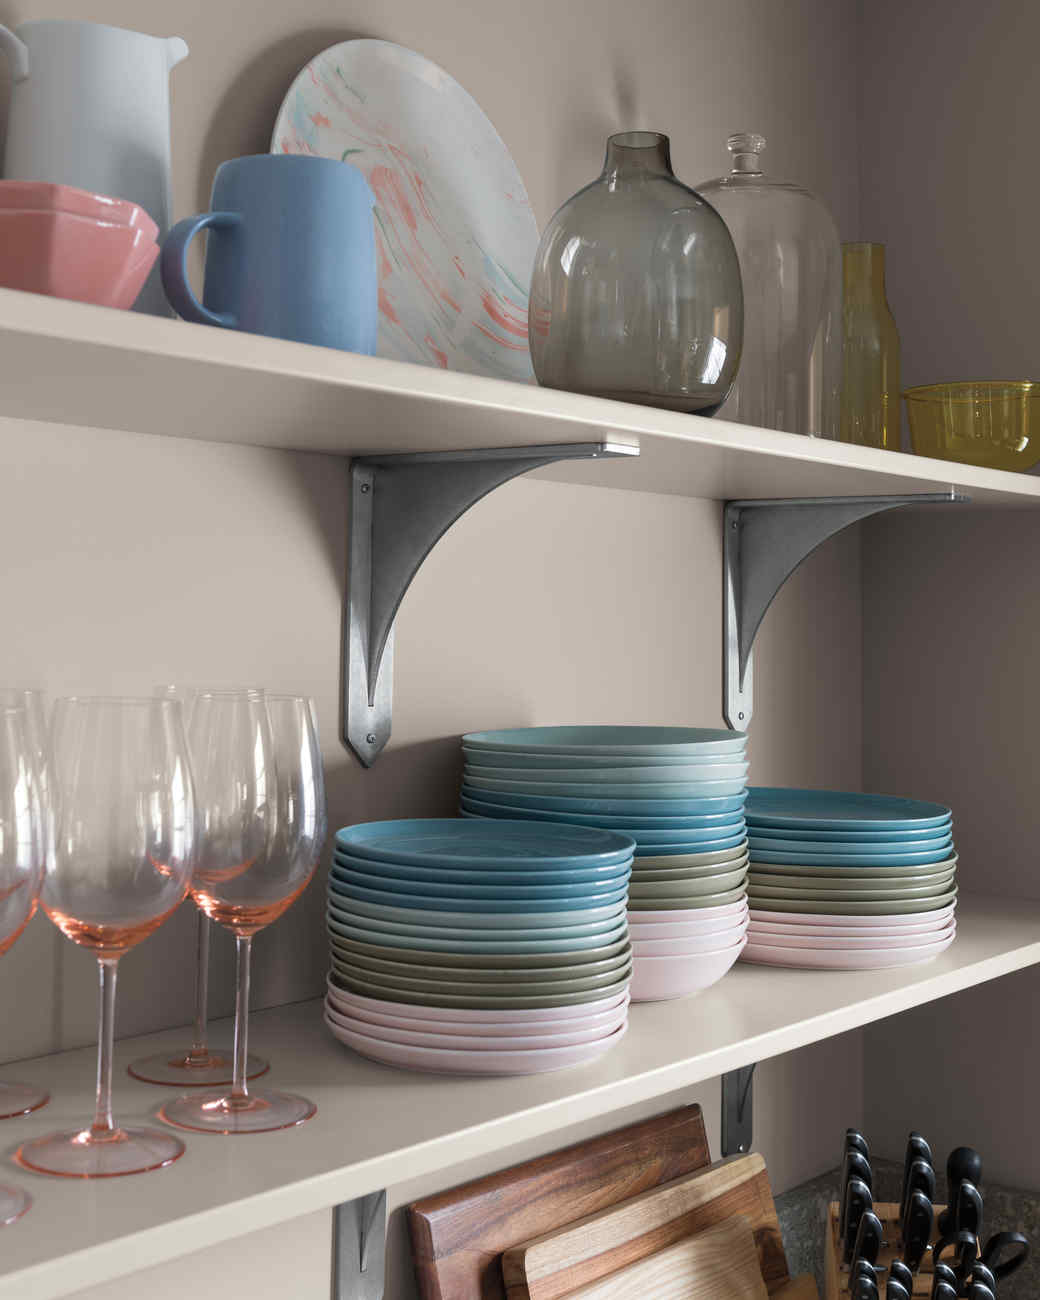 Martha Stewart Living Kitchen Designs from The Home Depot ...